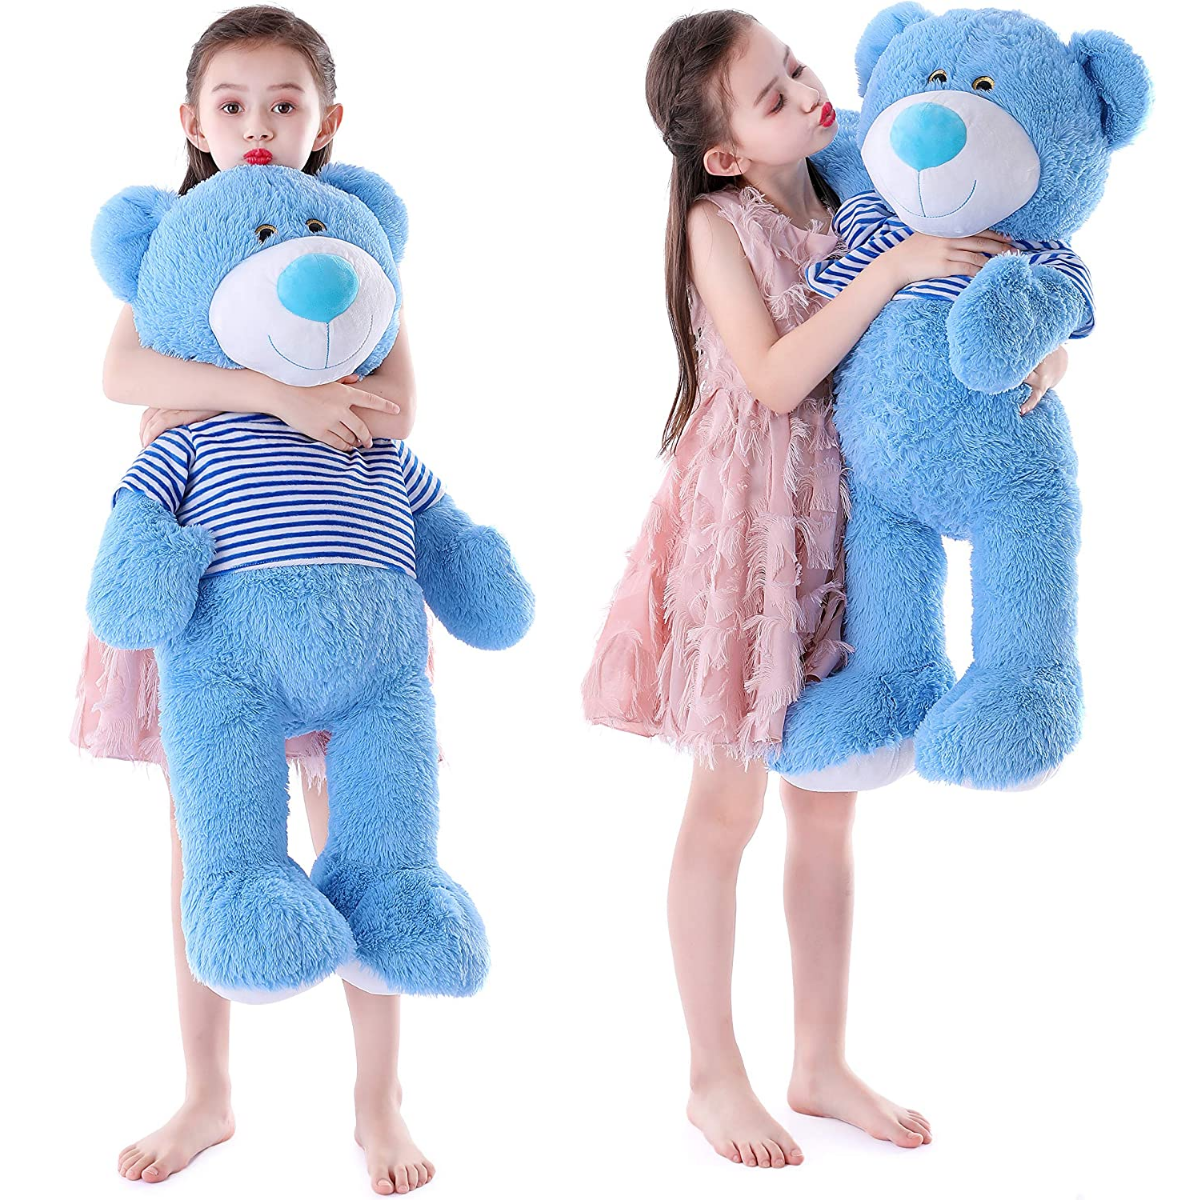 Giant Teddy Bear Plush Toy, Blue/Beige, 36 Inches